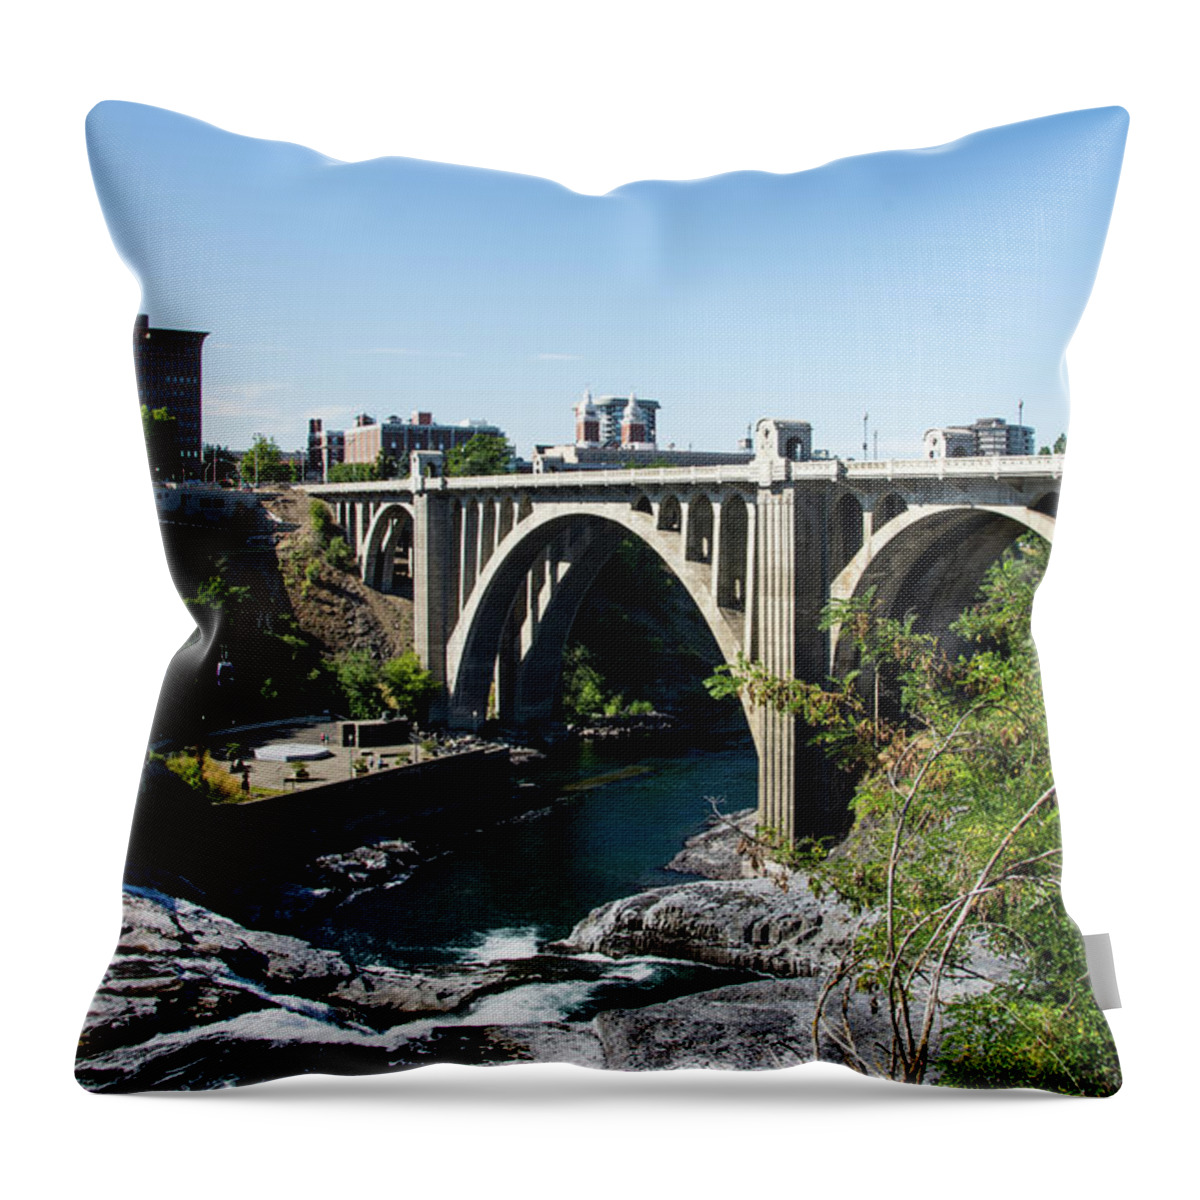 Lower Falls And Monroe Street Bridge Throw Pillow featuring the photograph Lower Falls and Monroe Street Bridge by Tom Cochran